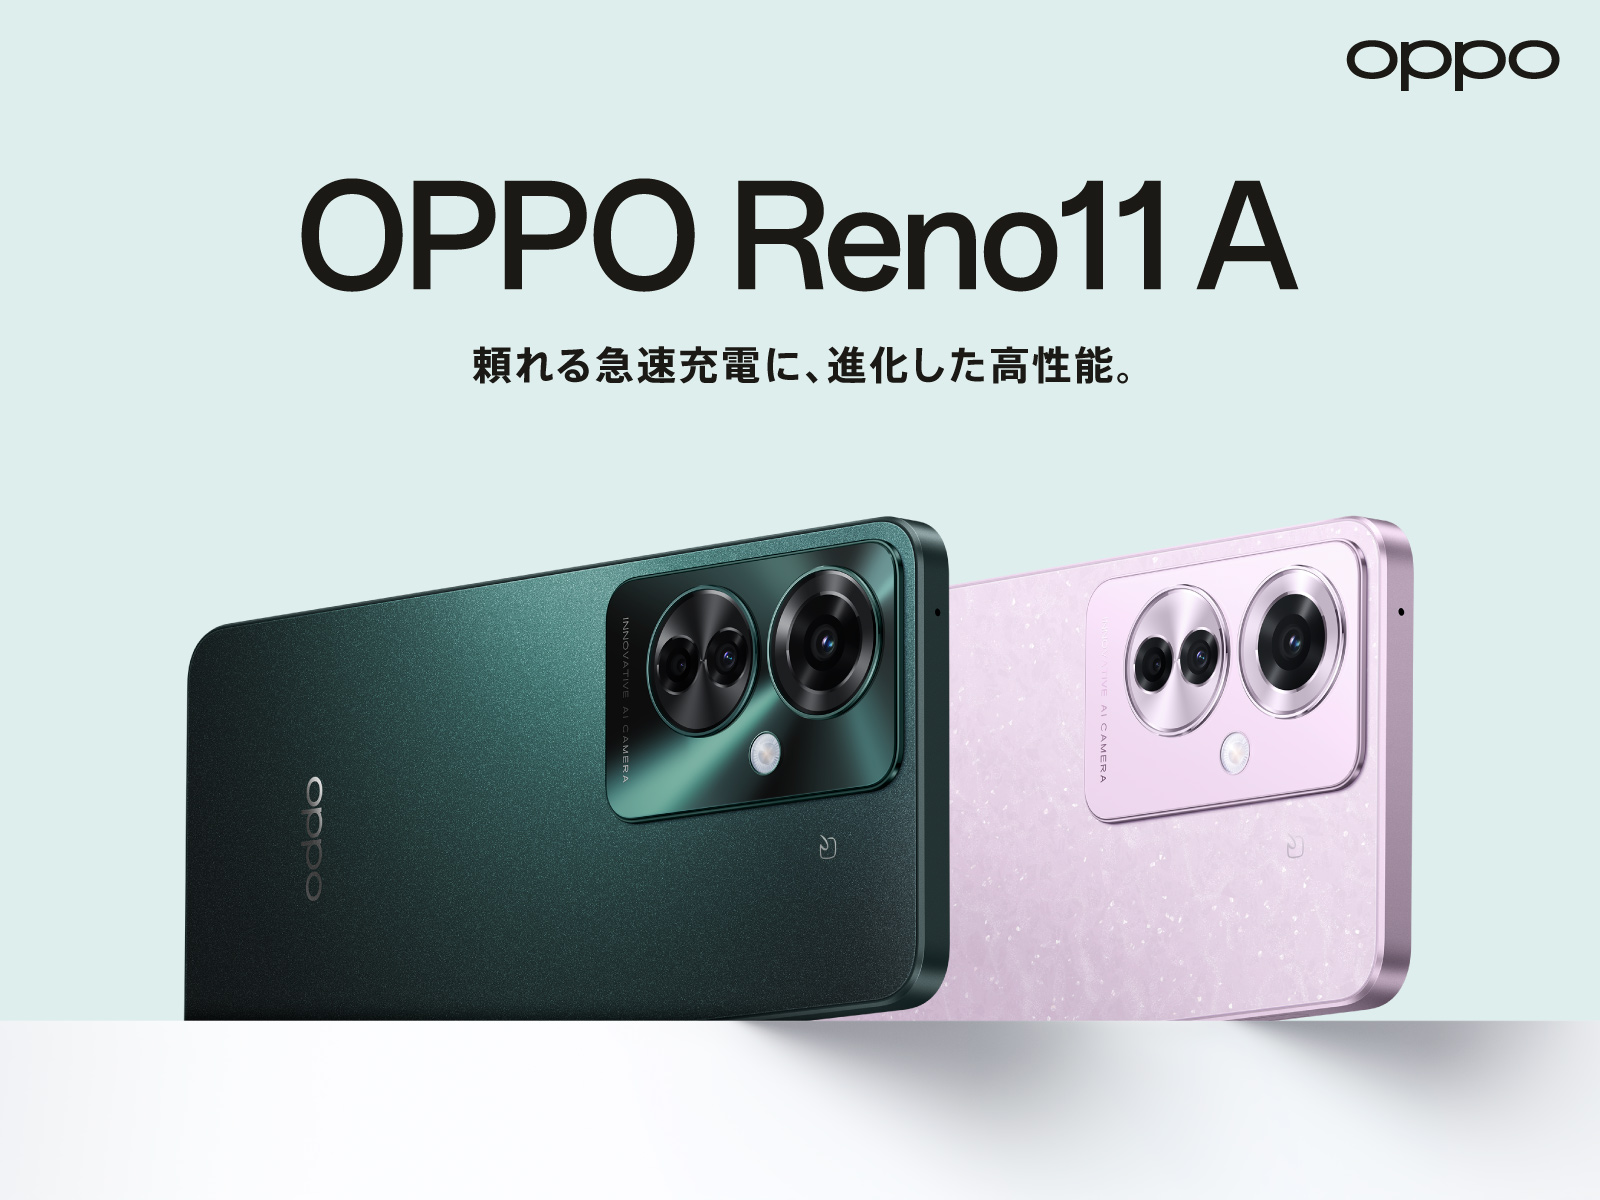 「OPPO Reno11 A」が6月27日に登場